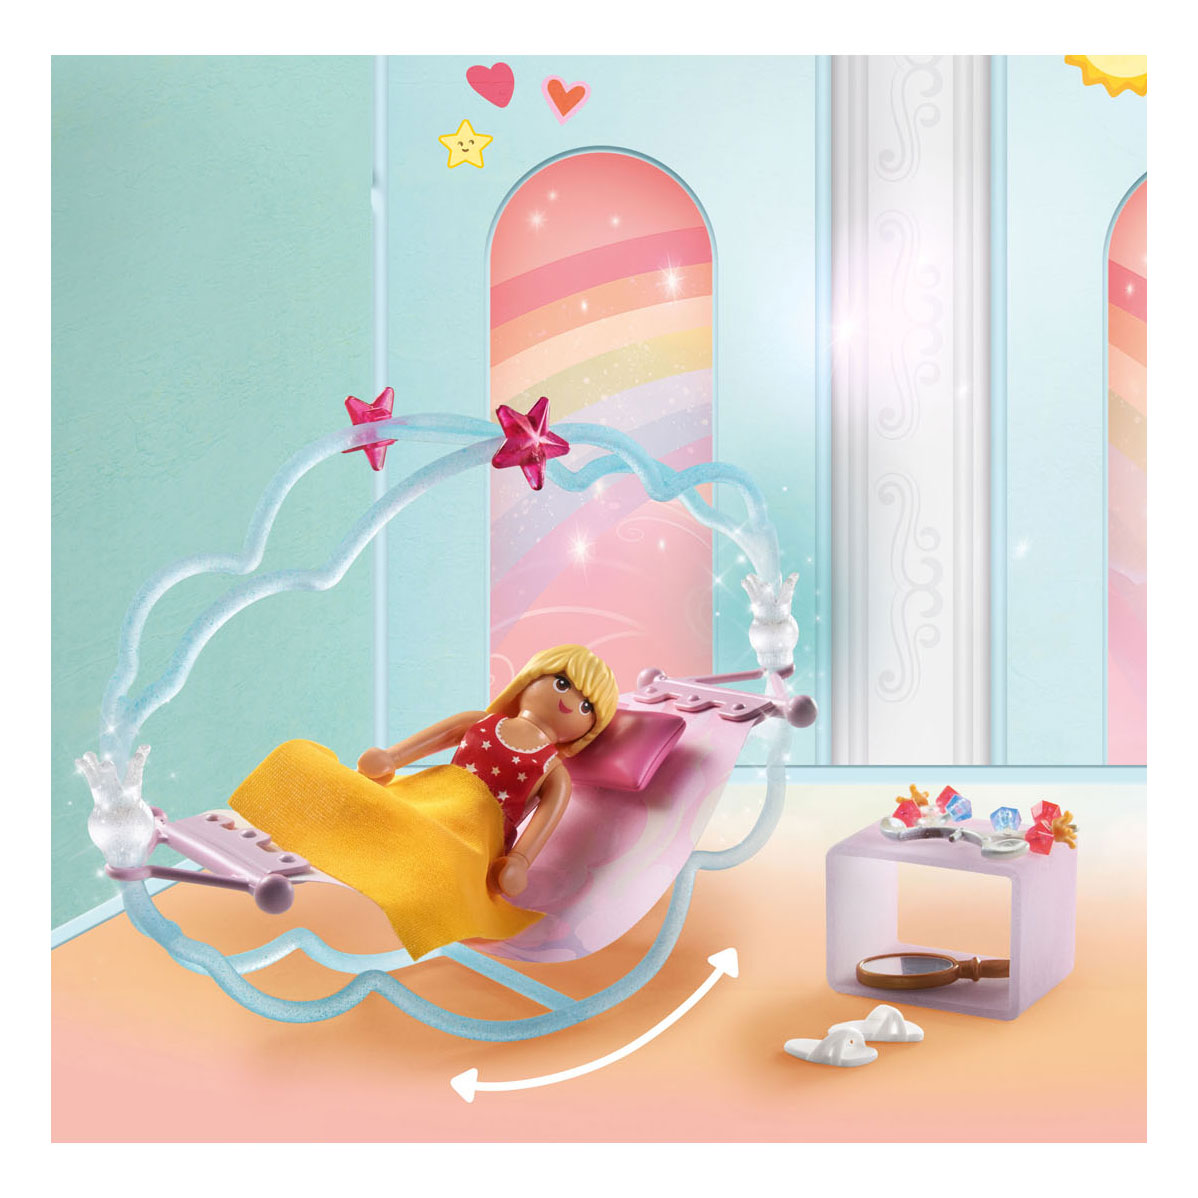 Playmobil Princess Magic Pyjamaparty in de Wolken - 71362